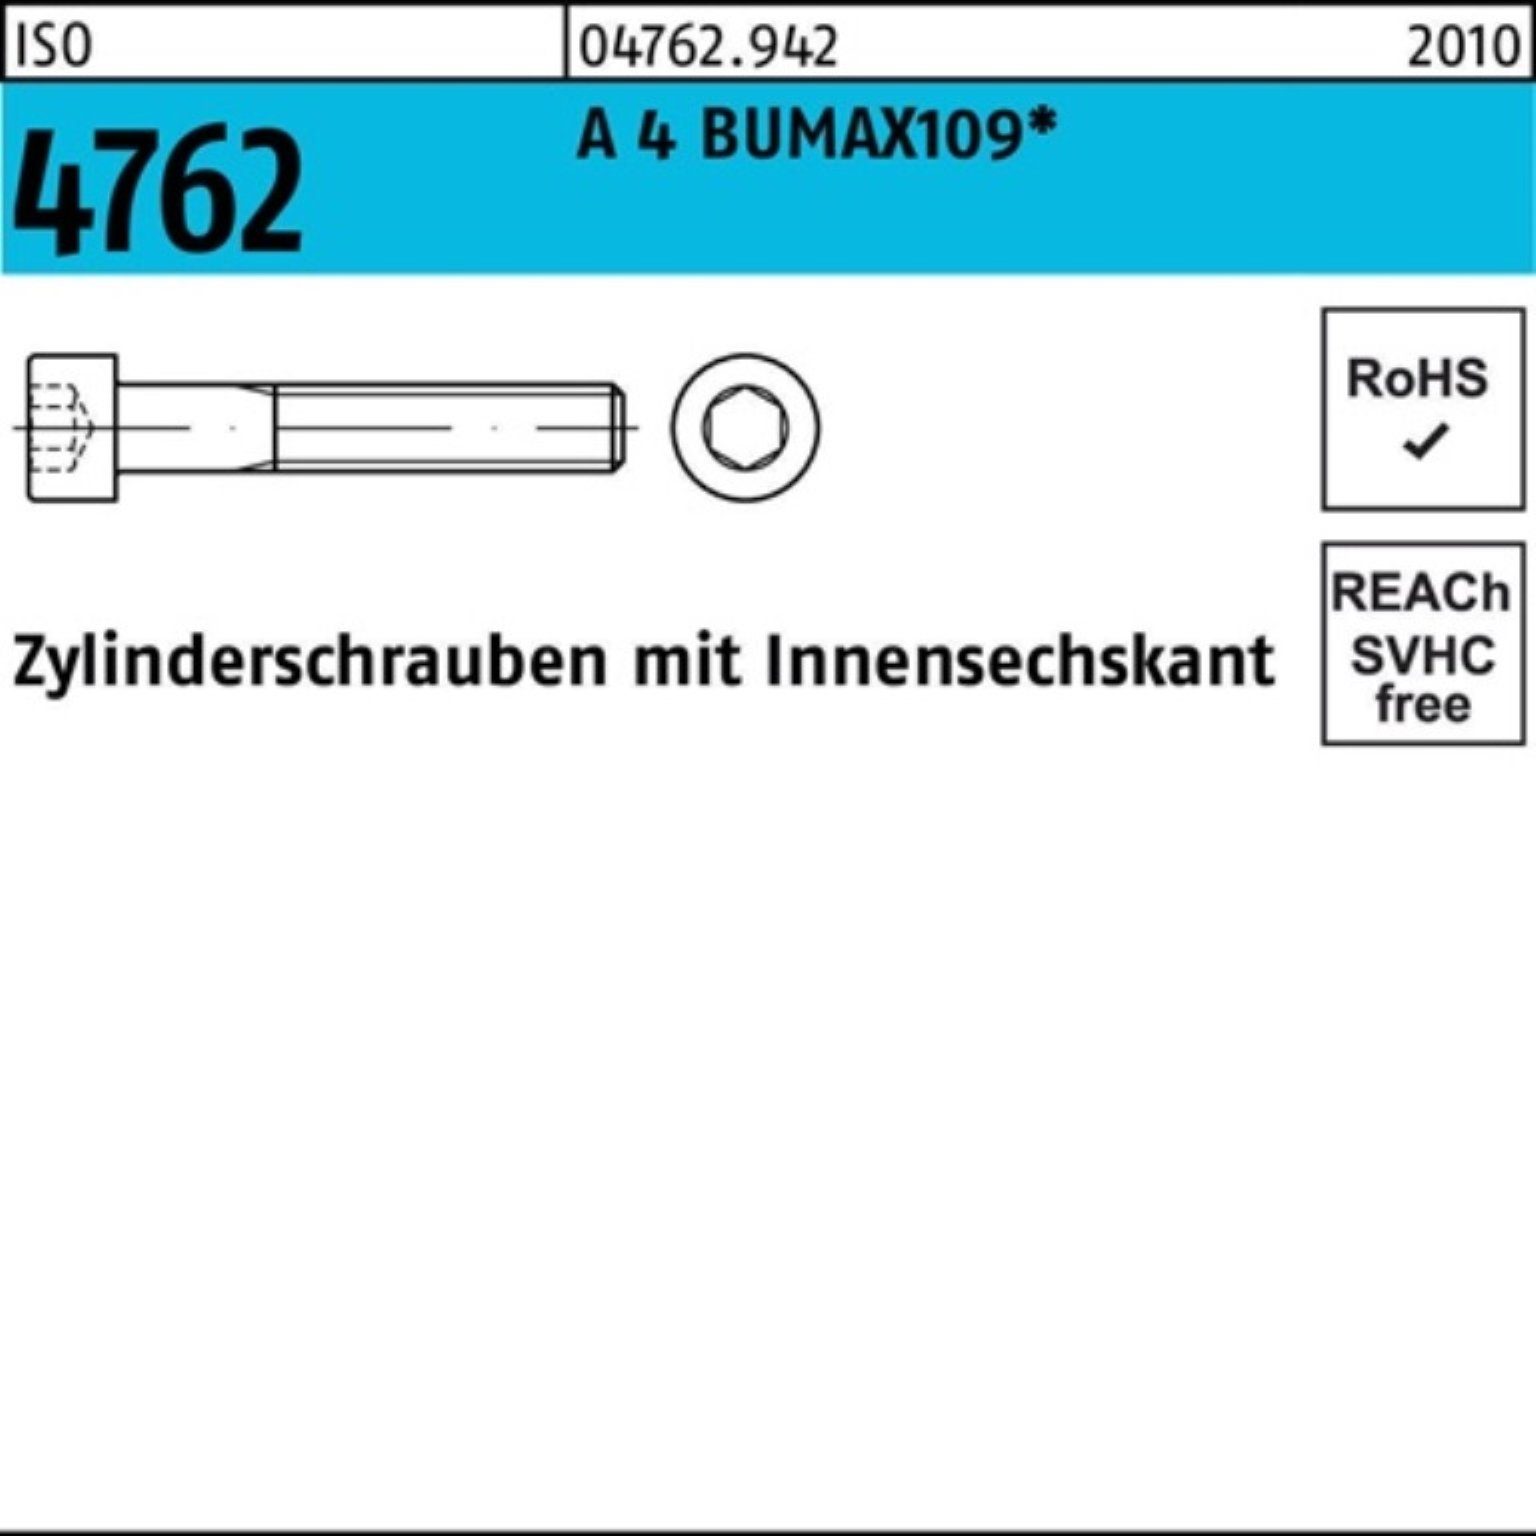 Bufab Zylinderschraube 100er Pack Zylinderschraube Innen-6kt 4762 70 ISO 25 M12x BUMAX109 A 4